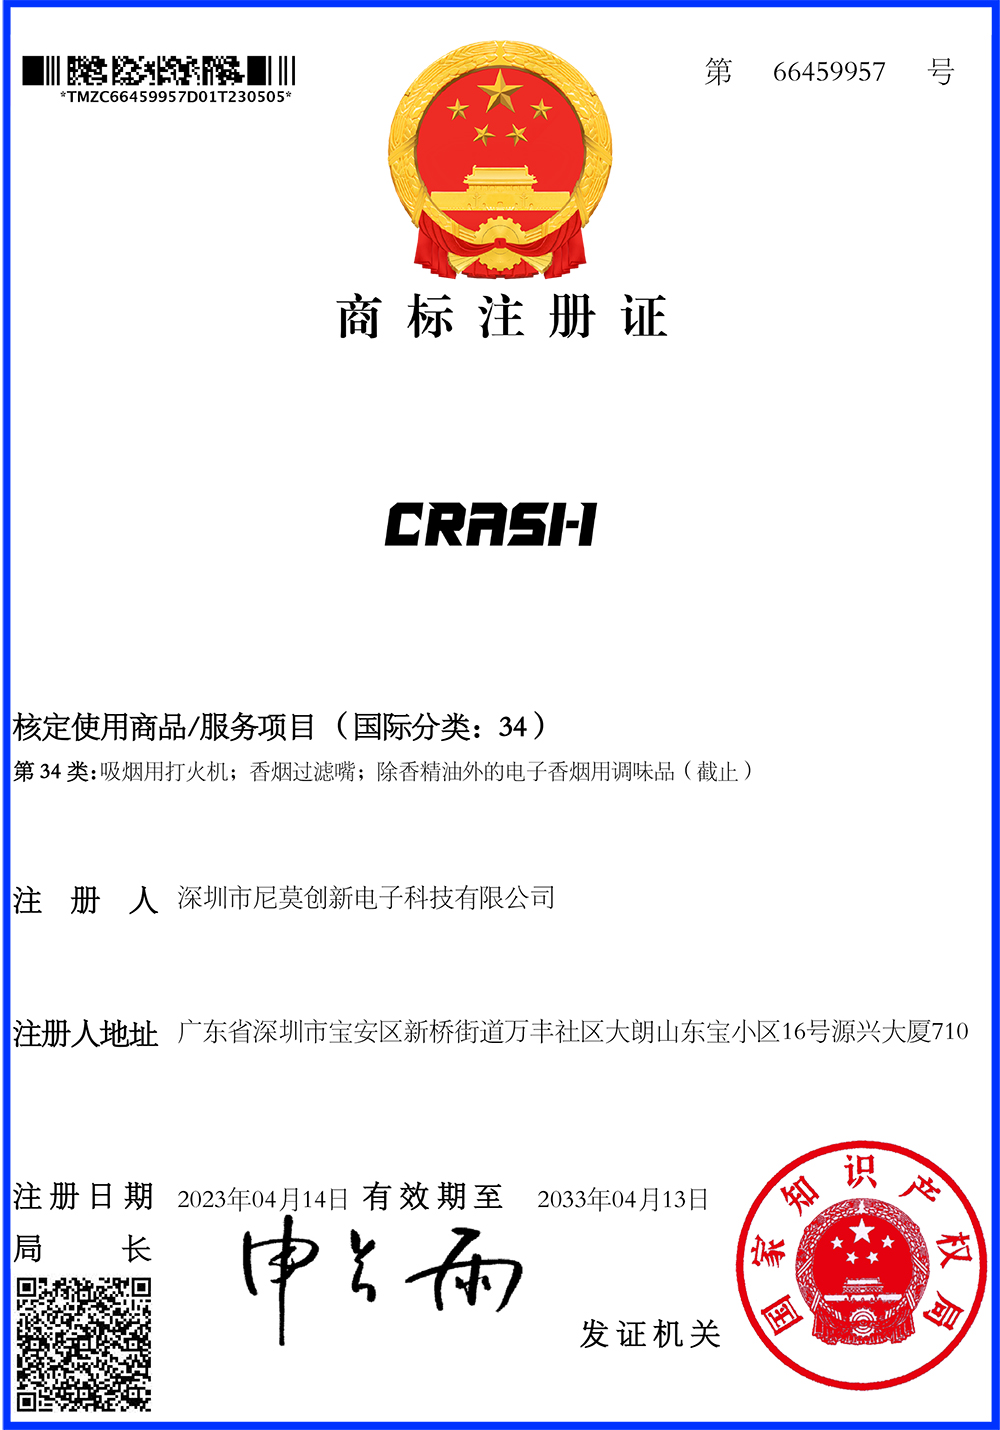 China Trademark Registration Certificate